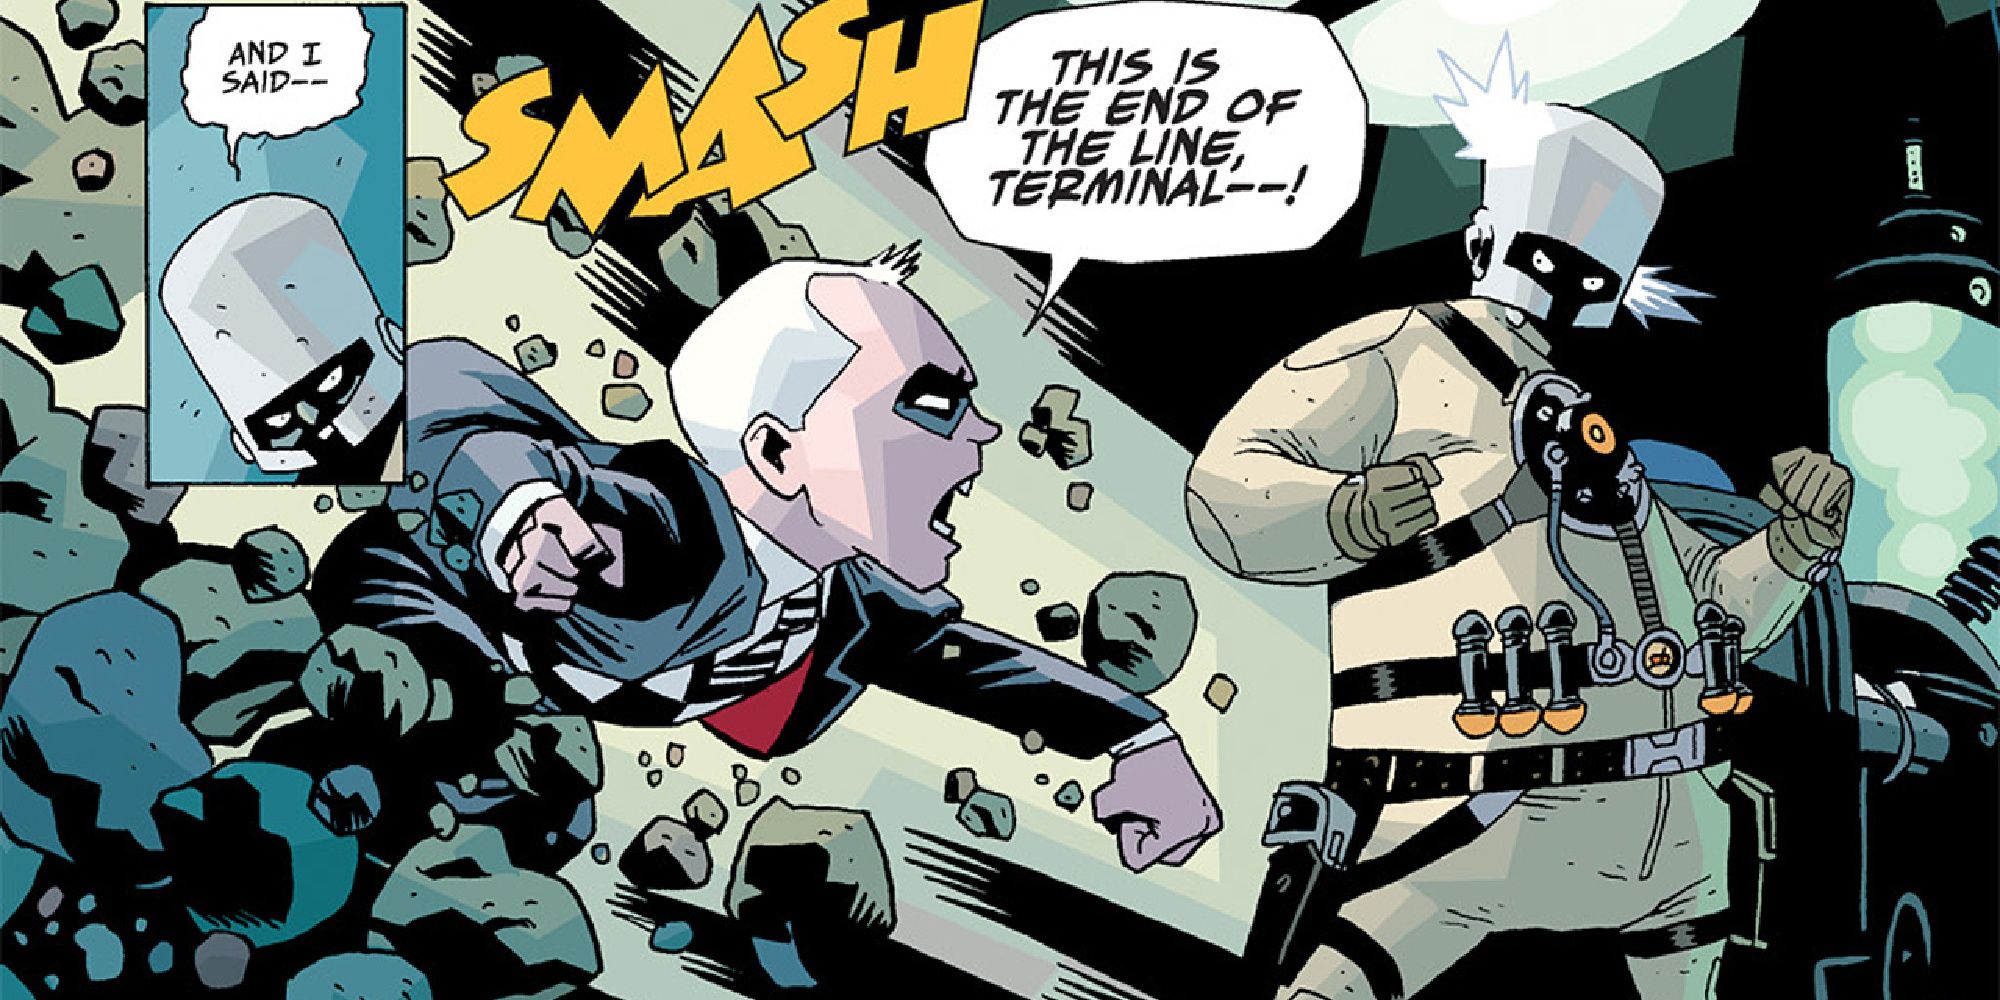 The Umbrella Academy fights Doctor Terminal in Dark Horse comics.